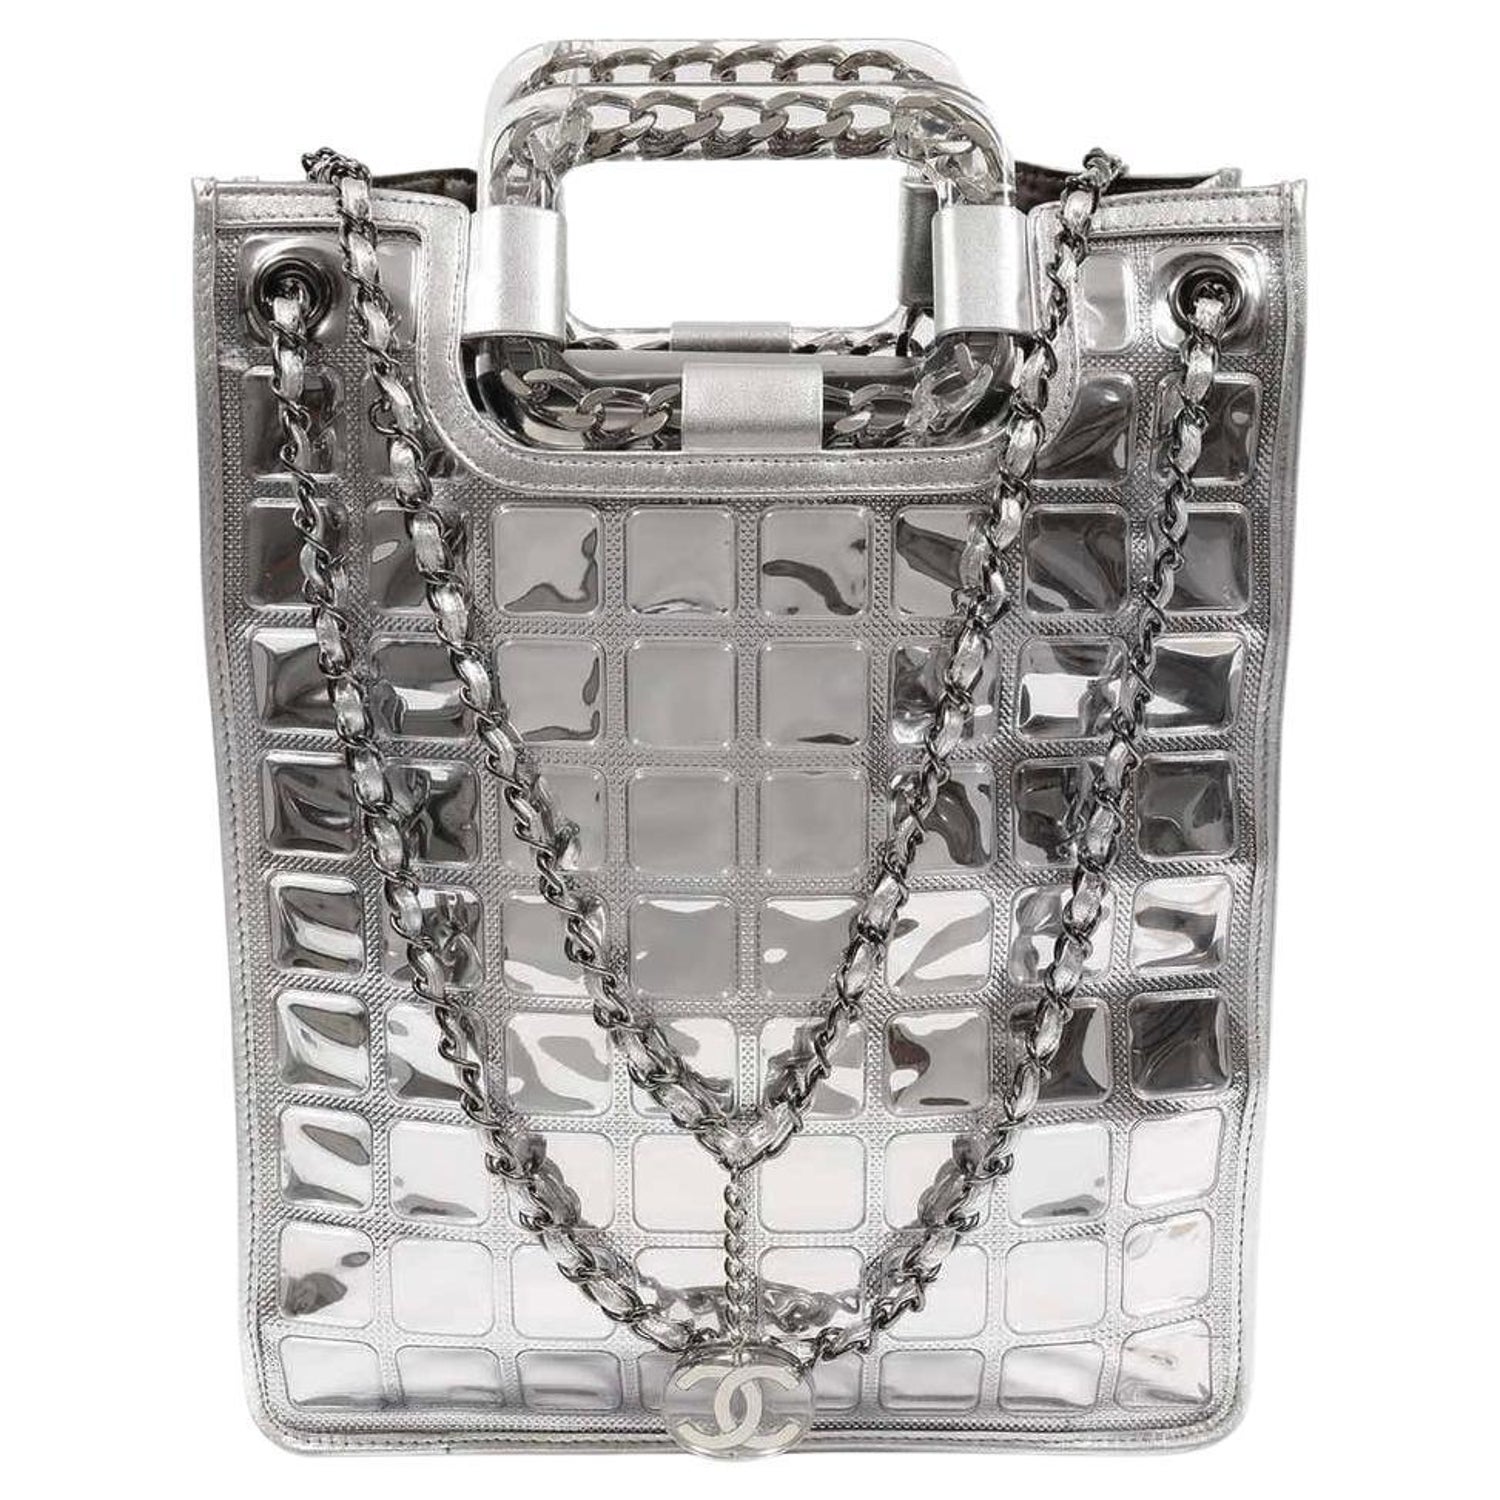 Chanel Ice Cube Handbags - 4 For Sale on 1stDibs